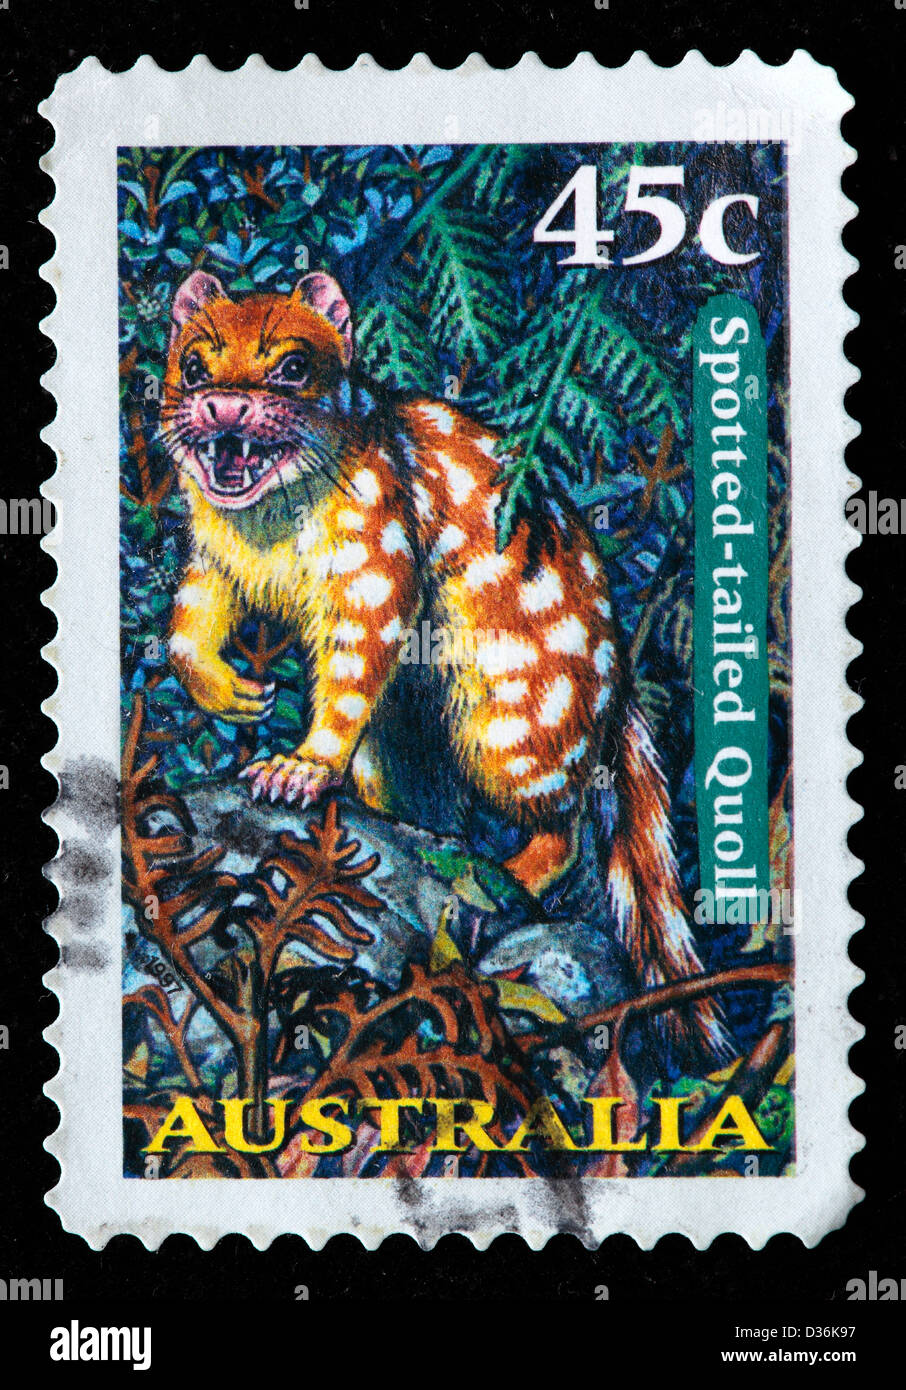 Avvistato-tailed quoll, francobollo, Australia, 1997 Foto Stock